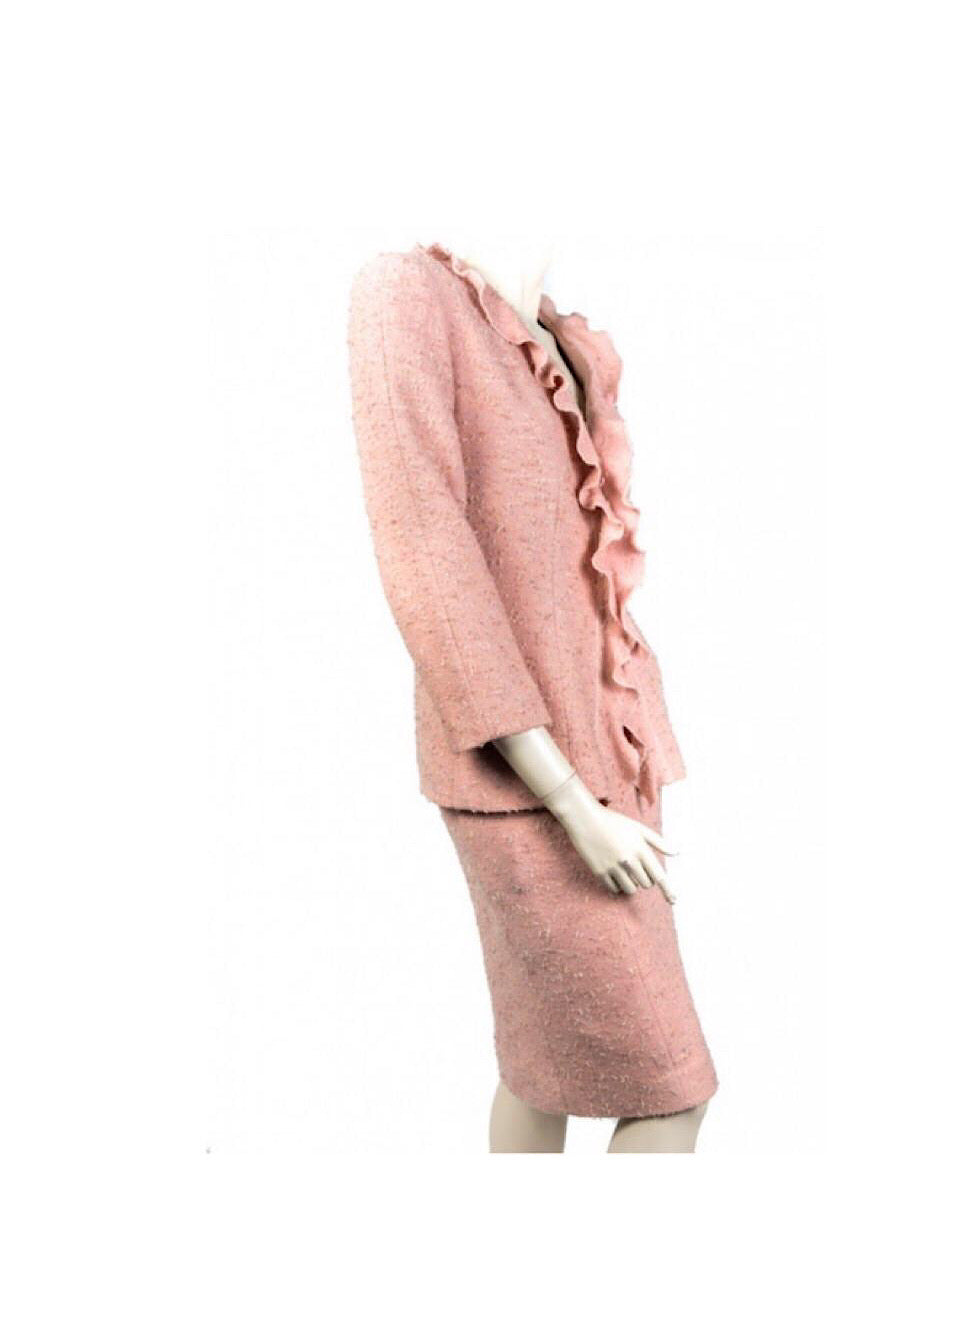 Chanel Tweed Skirt Suit, Printemps 1999 - Capsule Auctions